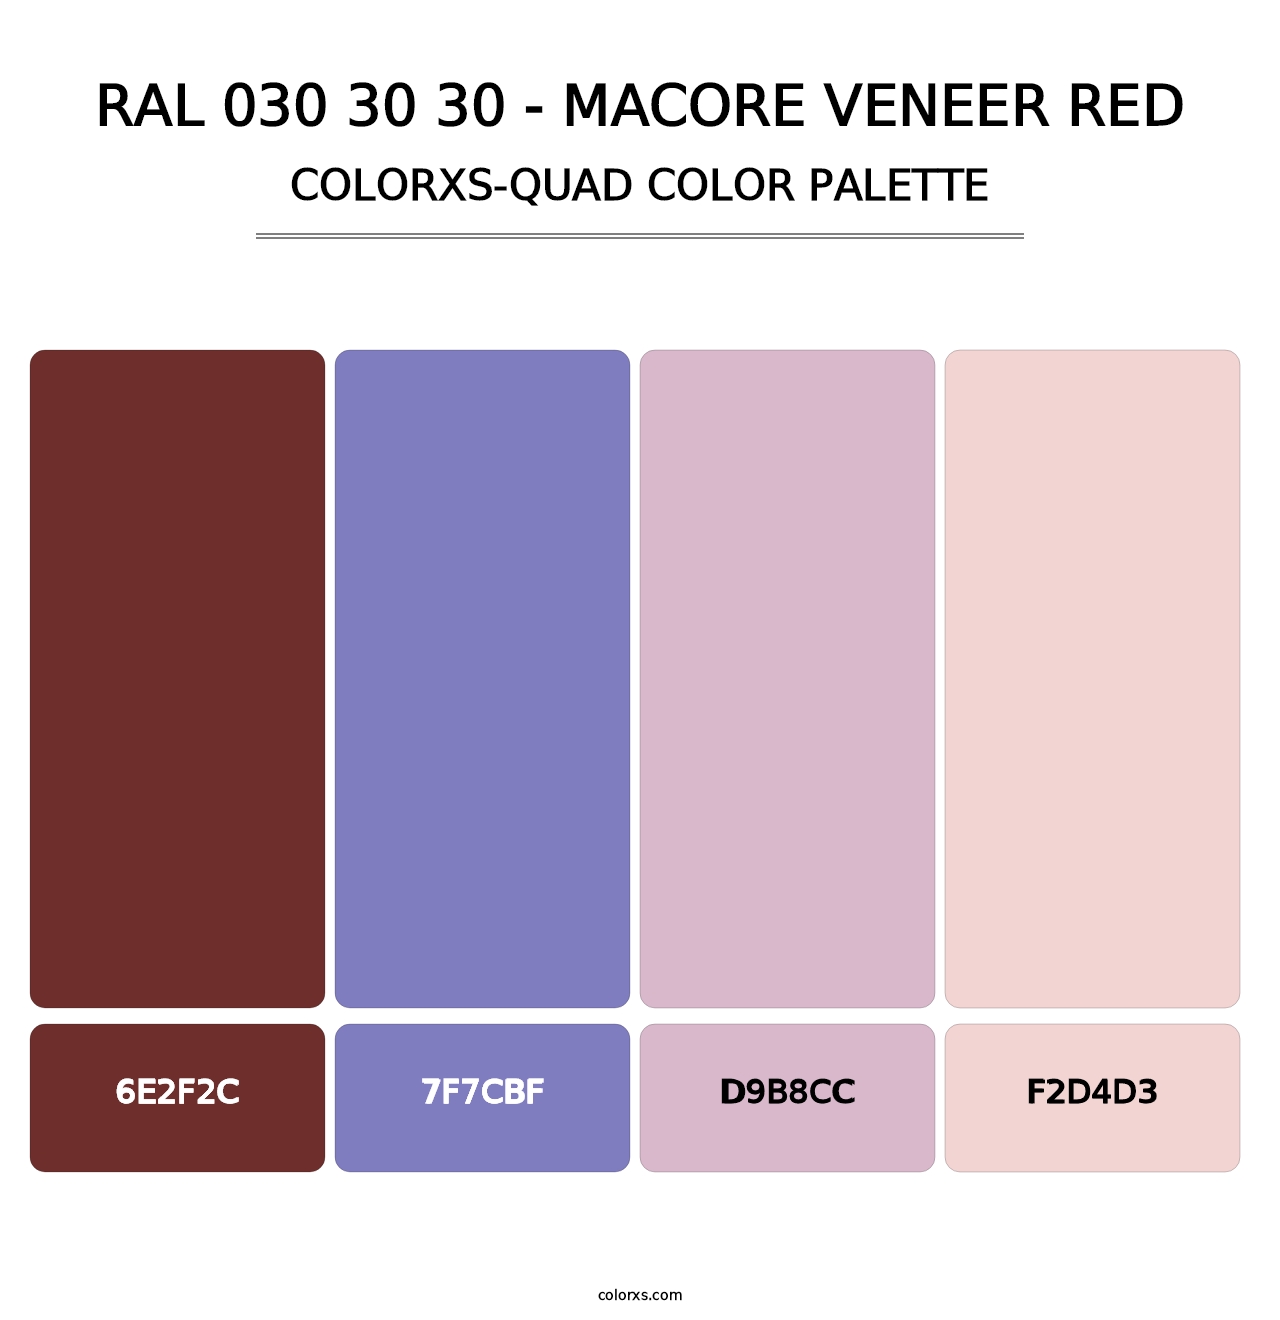 RAL 030 30 30 - Macore Veneer Red - Colorxs Quad Palette